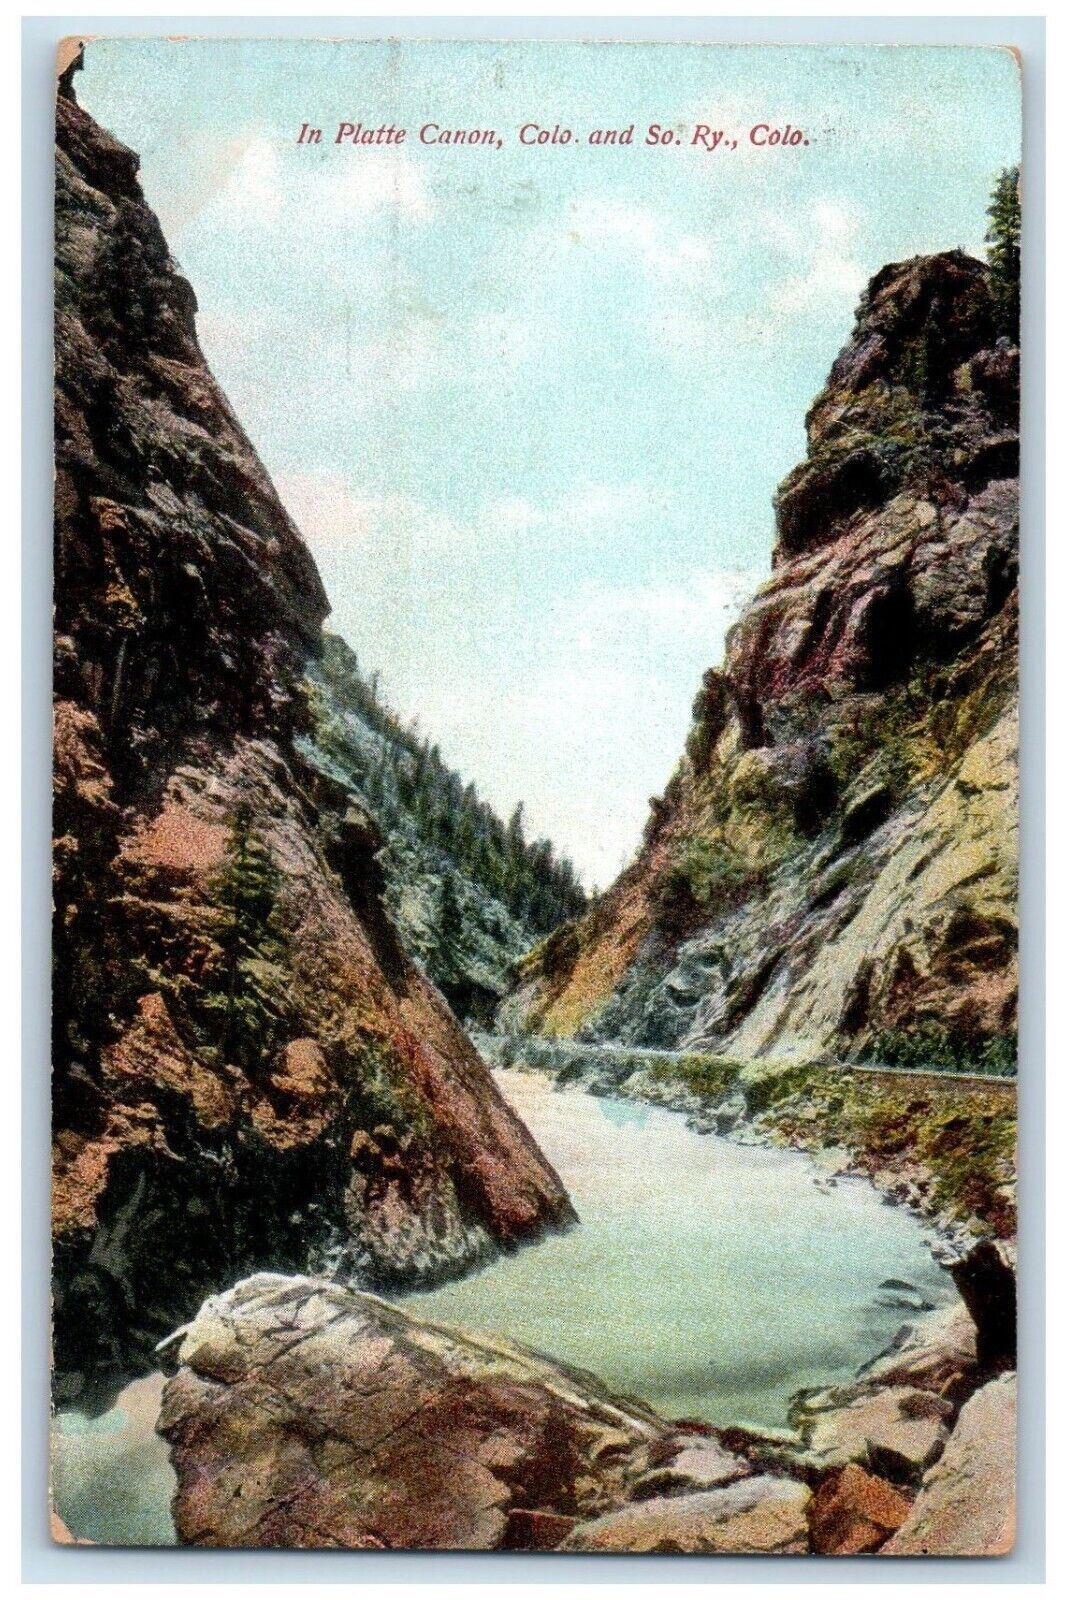 1909 In Platte Canon Colorado And So. Ry Colorado CO Posted Antique Postcard